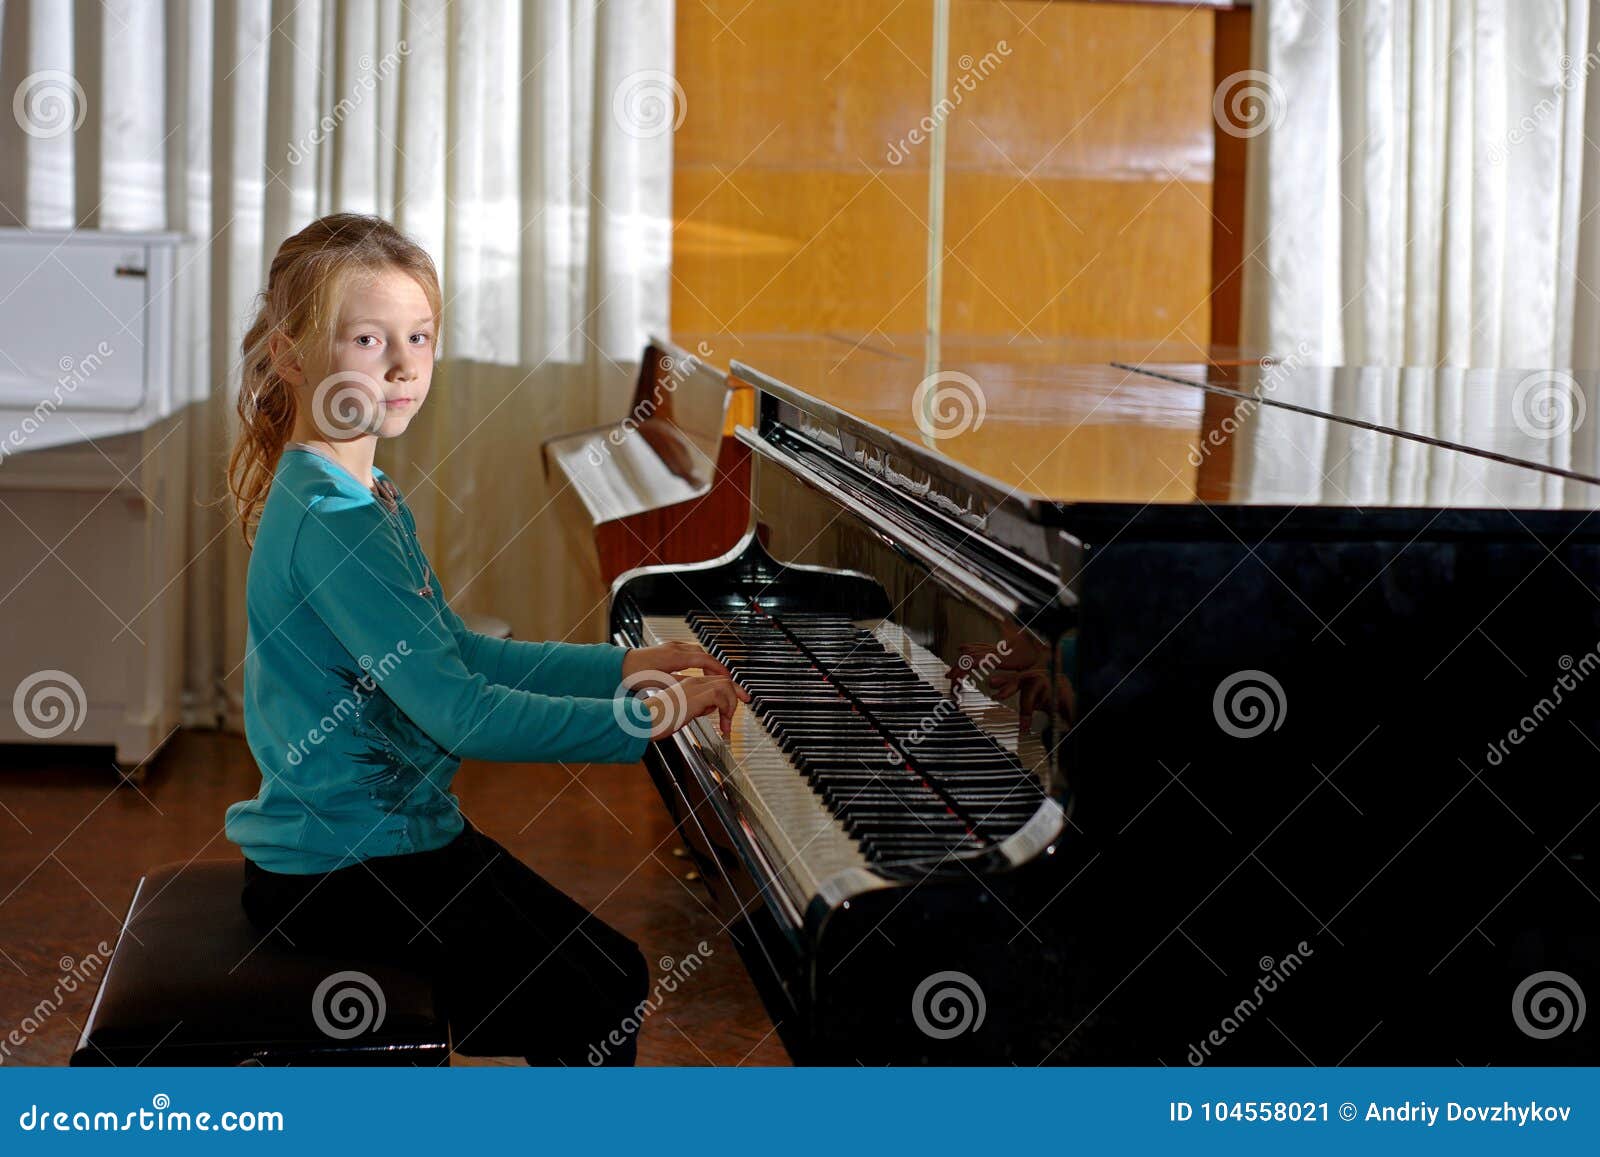 Look she plays the piano. Репетиция фортепиано. Двойная репетиция на фортепиано. Гранд пиано Клоуз пиано что лучше. A girl is playing the Piano photo.